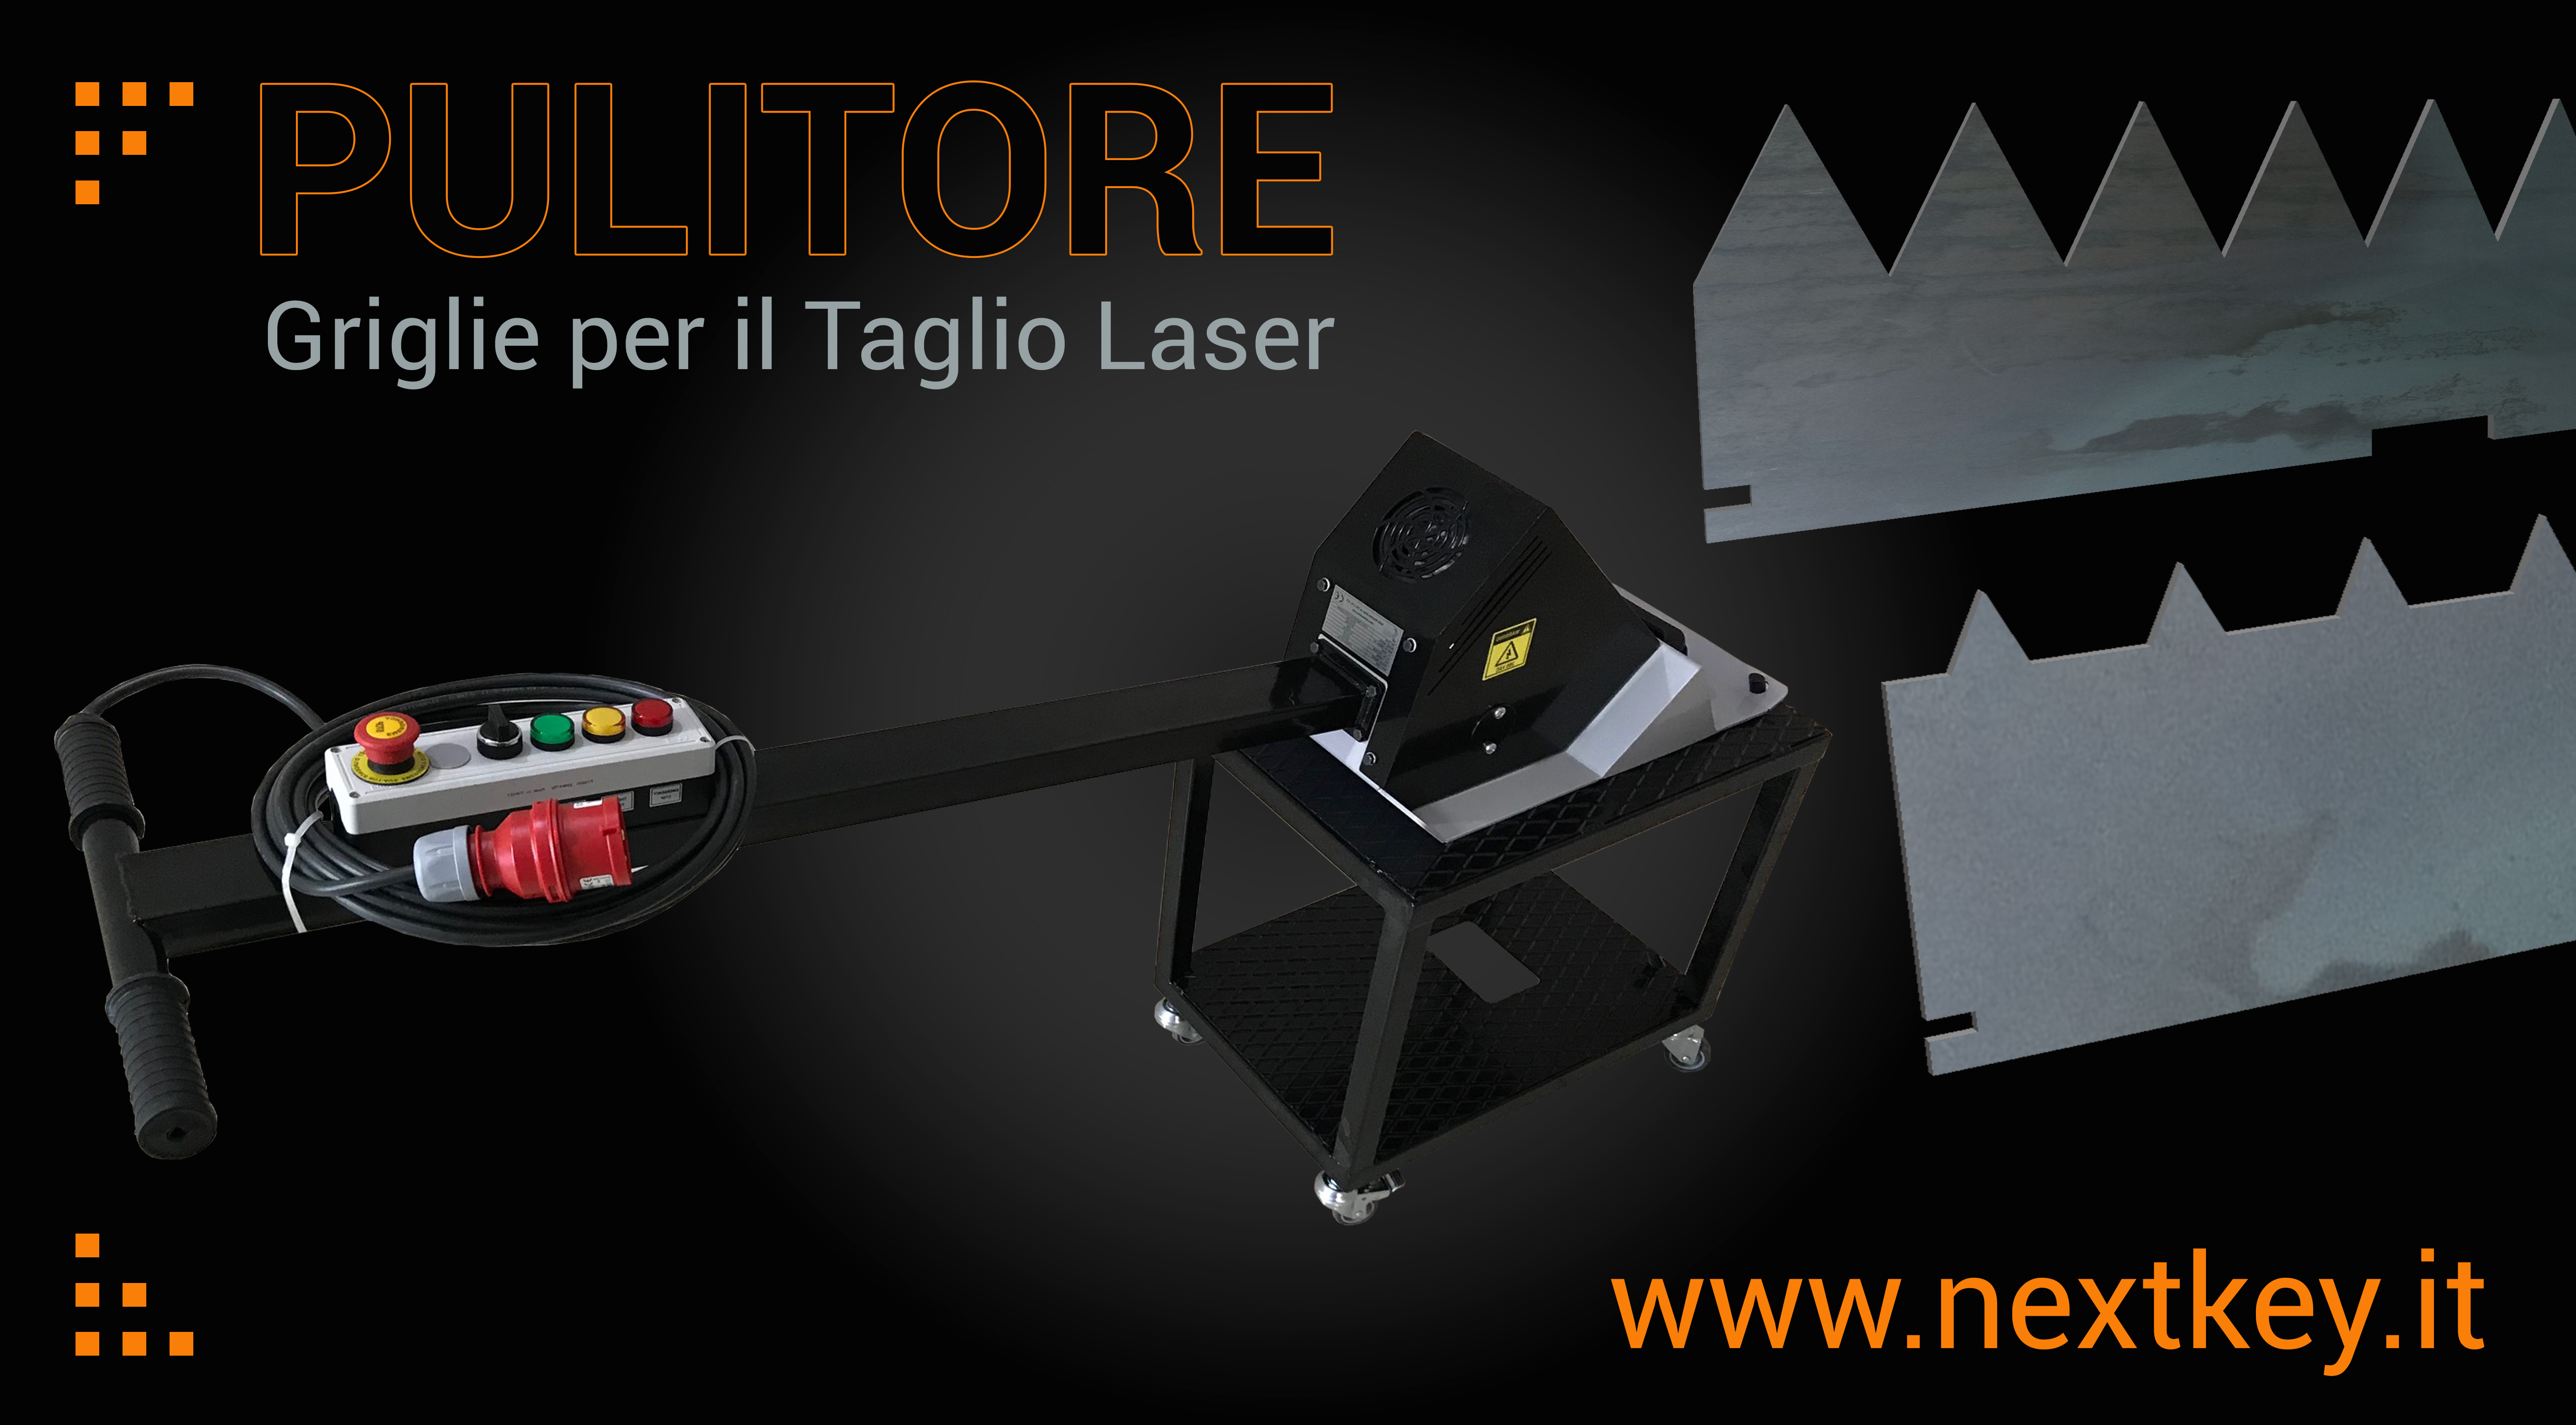 Foto 6 - Puligriglie per laser | NextKey srl Brescia